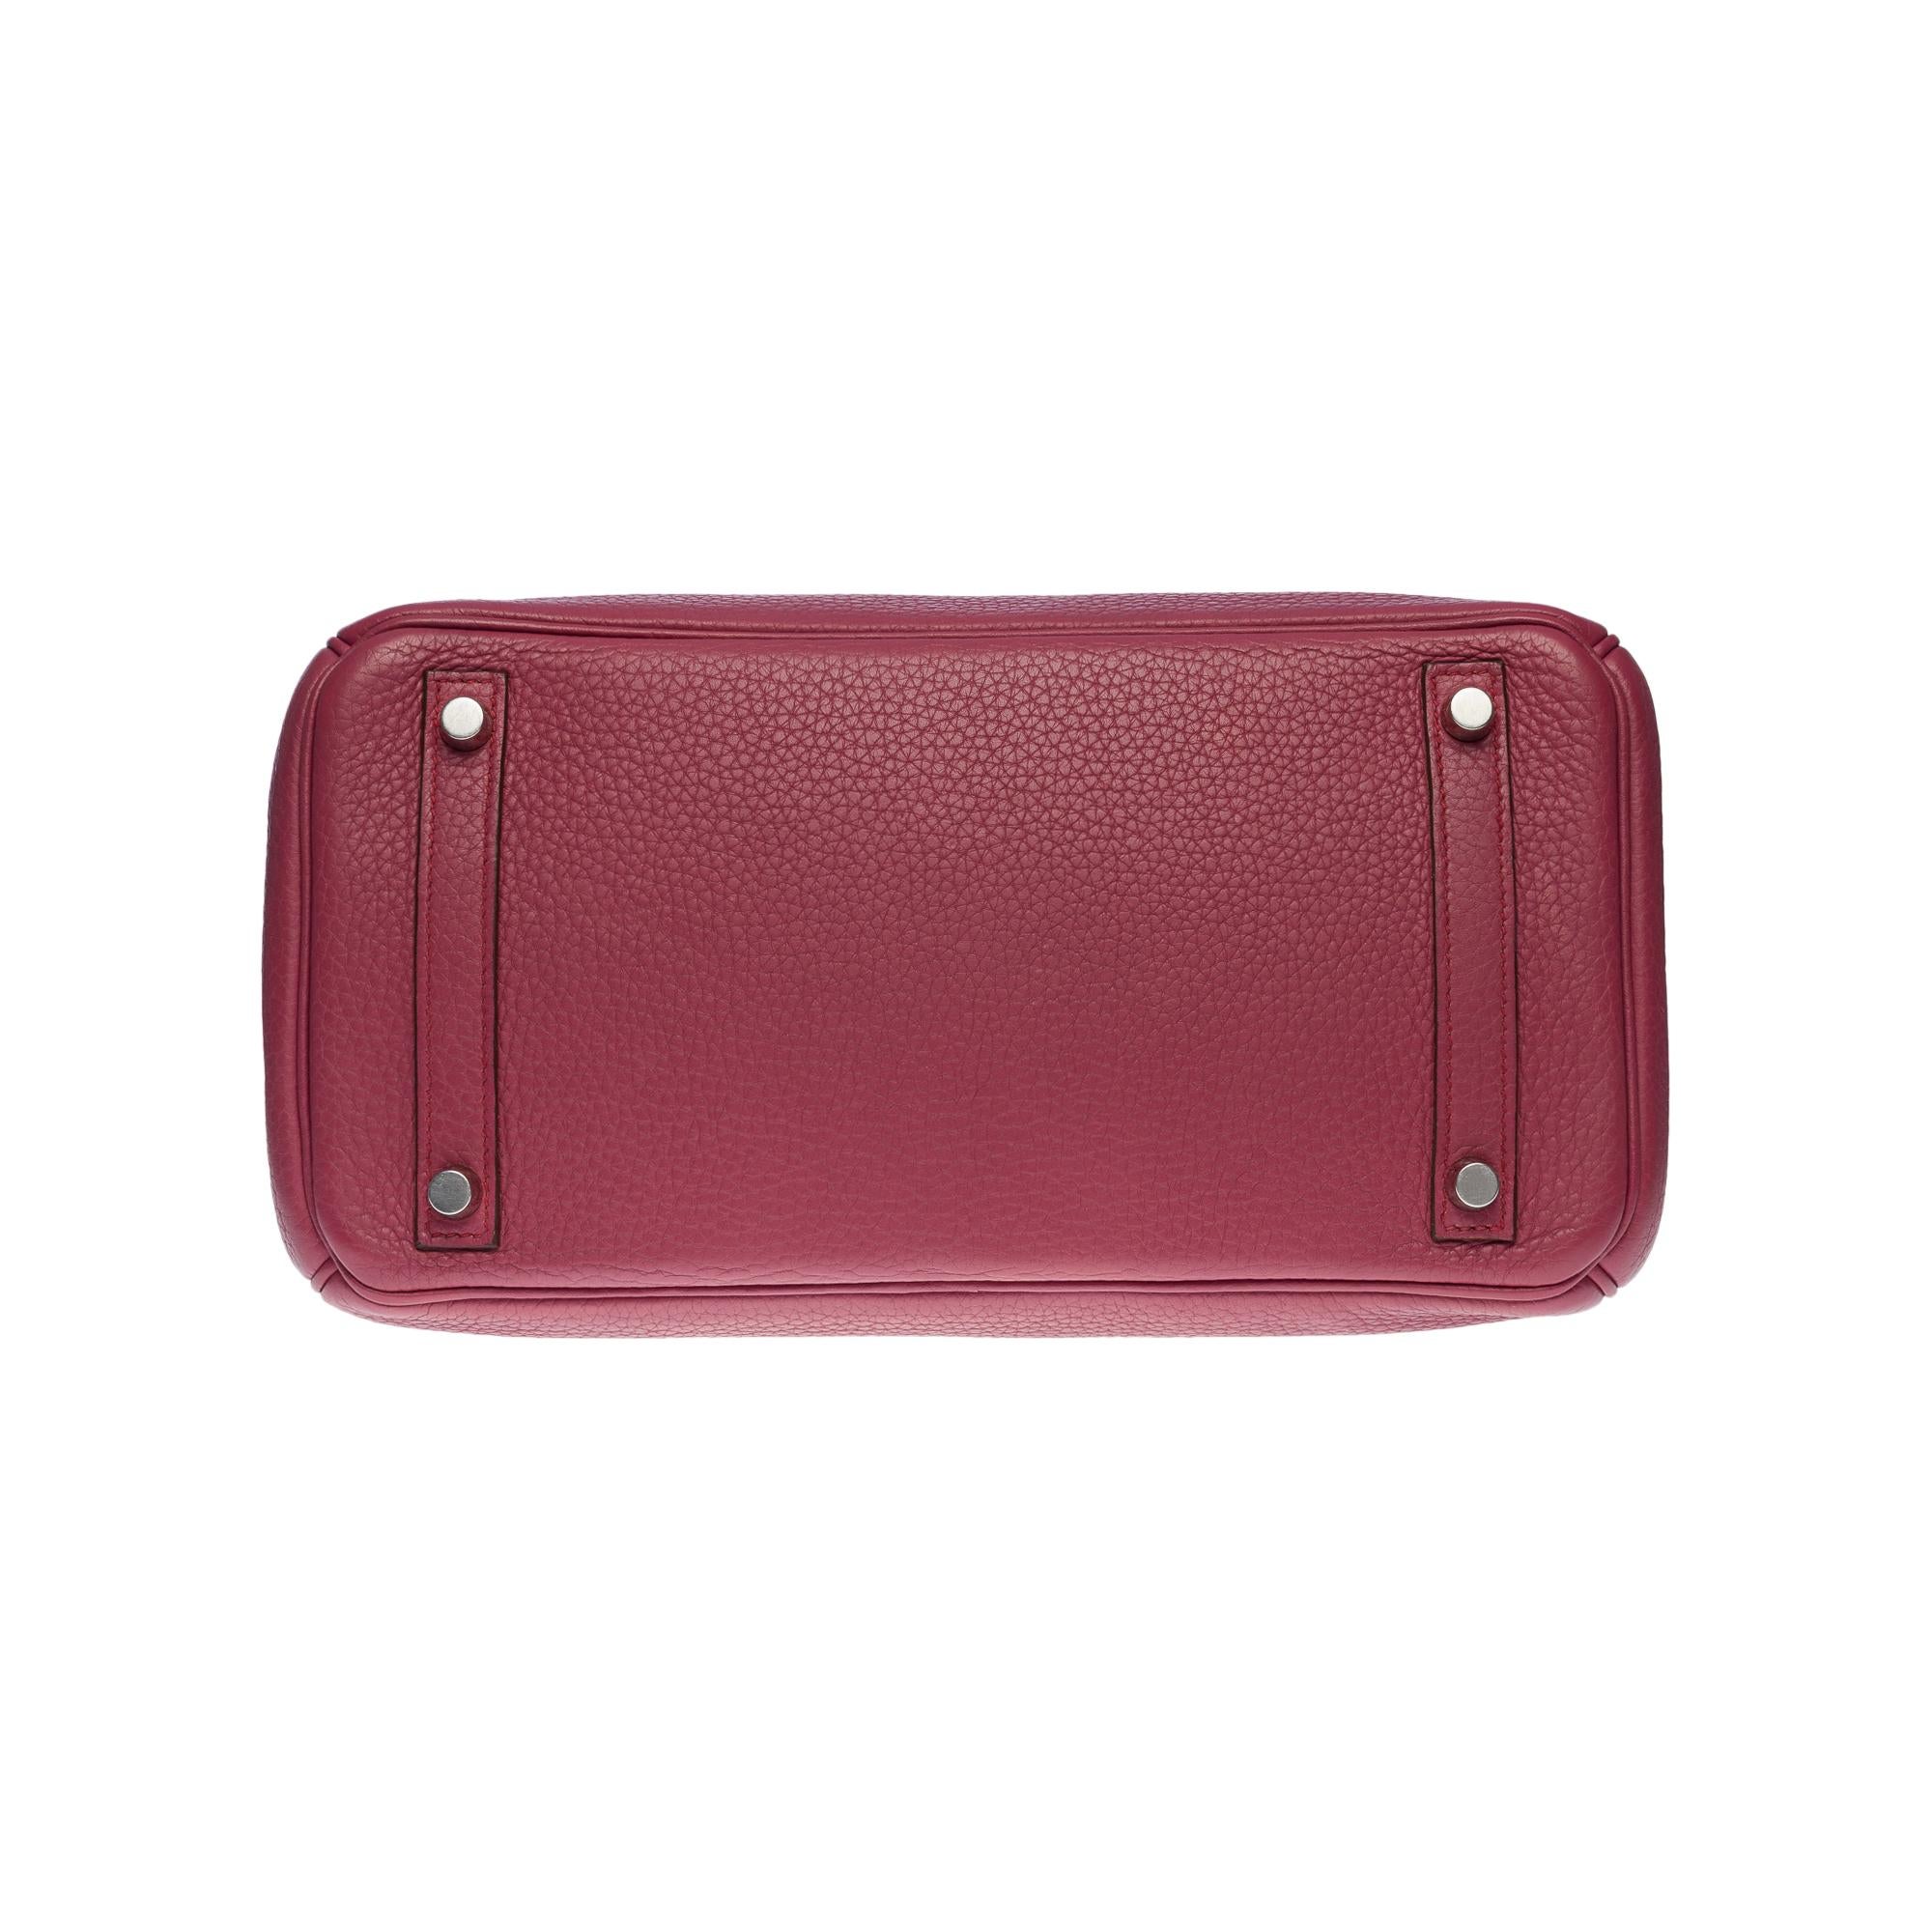 Amazing Hermès Birkin 30 handbag in Bois de rose Togo leather, SHW For Sale 2